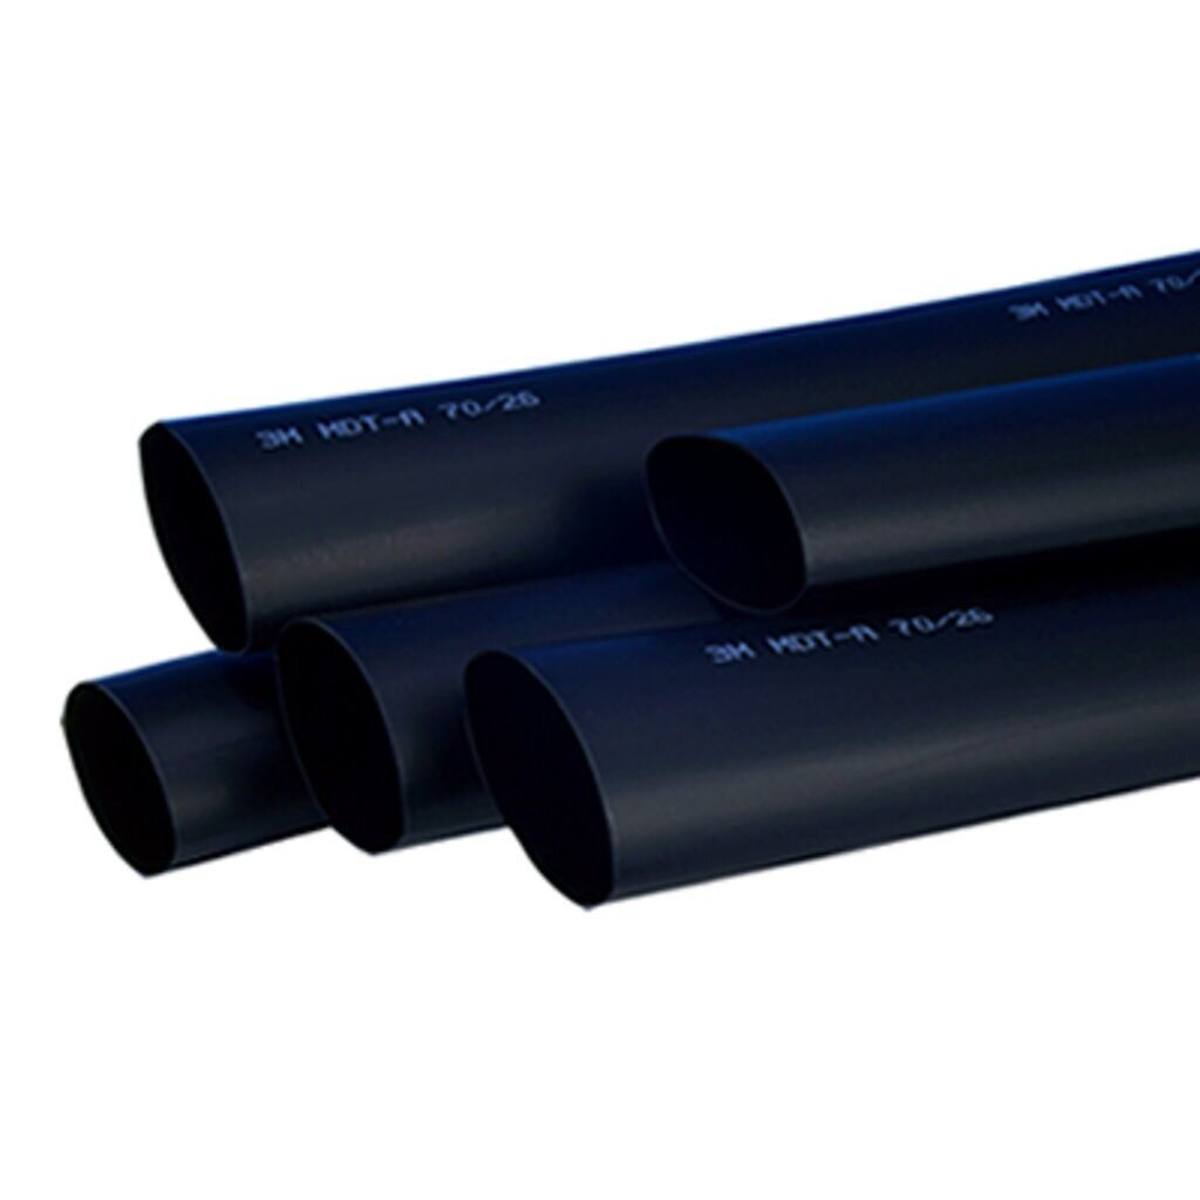 3M MDT-A Medium-wall heat-shrink tubing with adhesive, black, 27/8 mm, 1 m